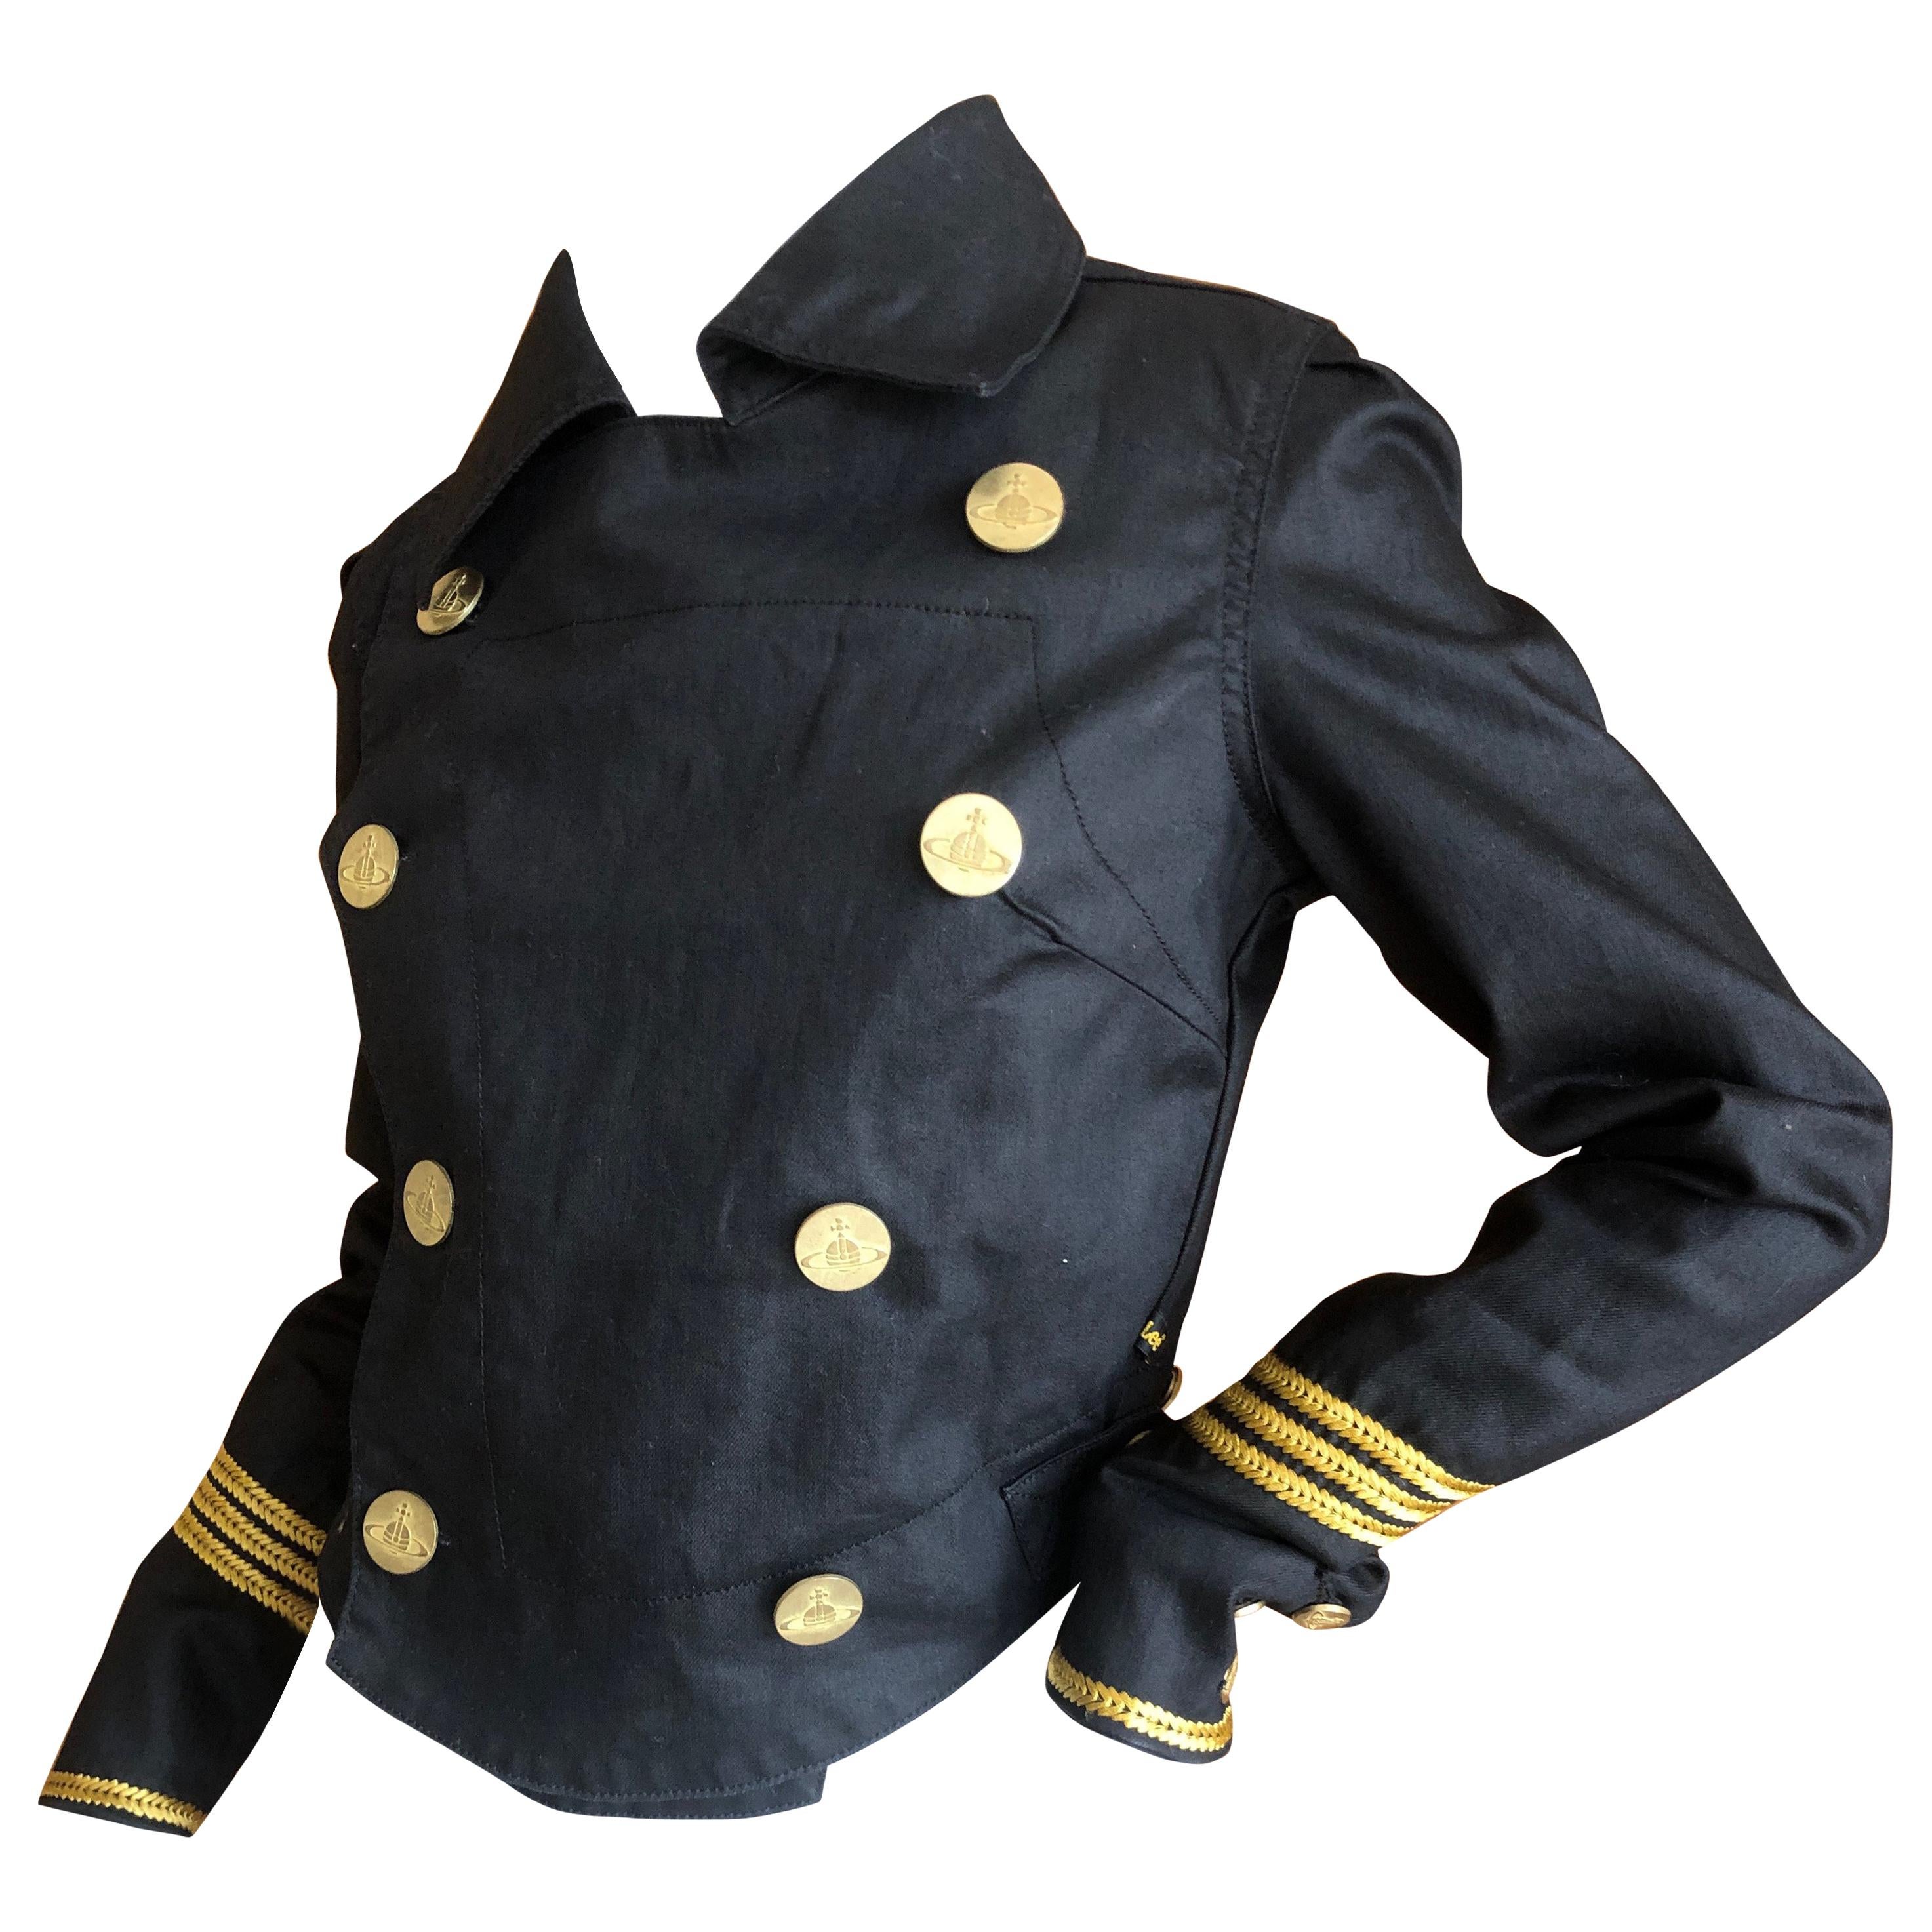 Vivienne Westwood Anglomania 2012 Black Denim "Frieda" Jacket for Lee New w Tags For Sale